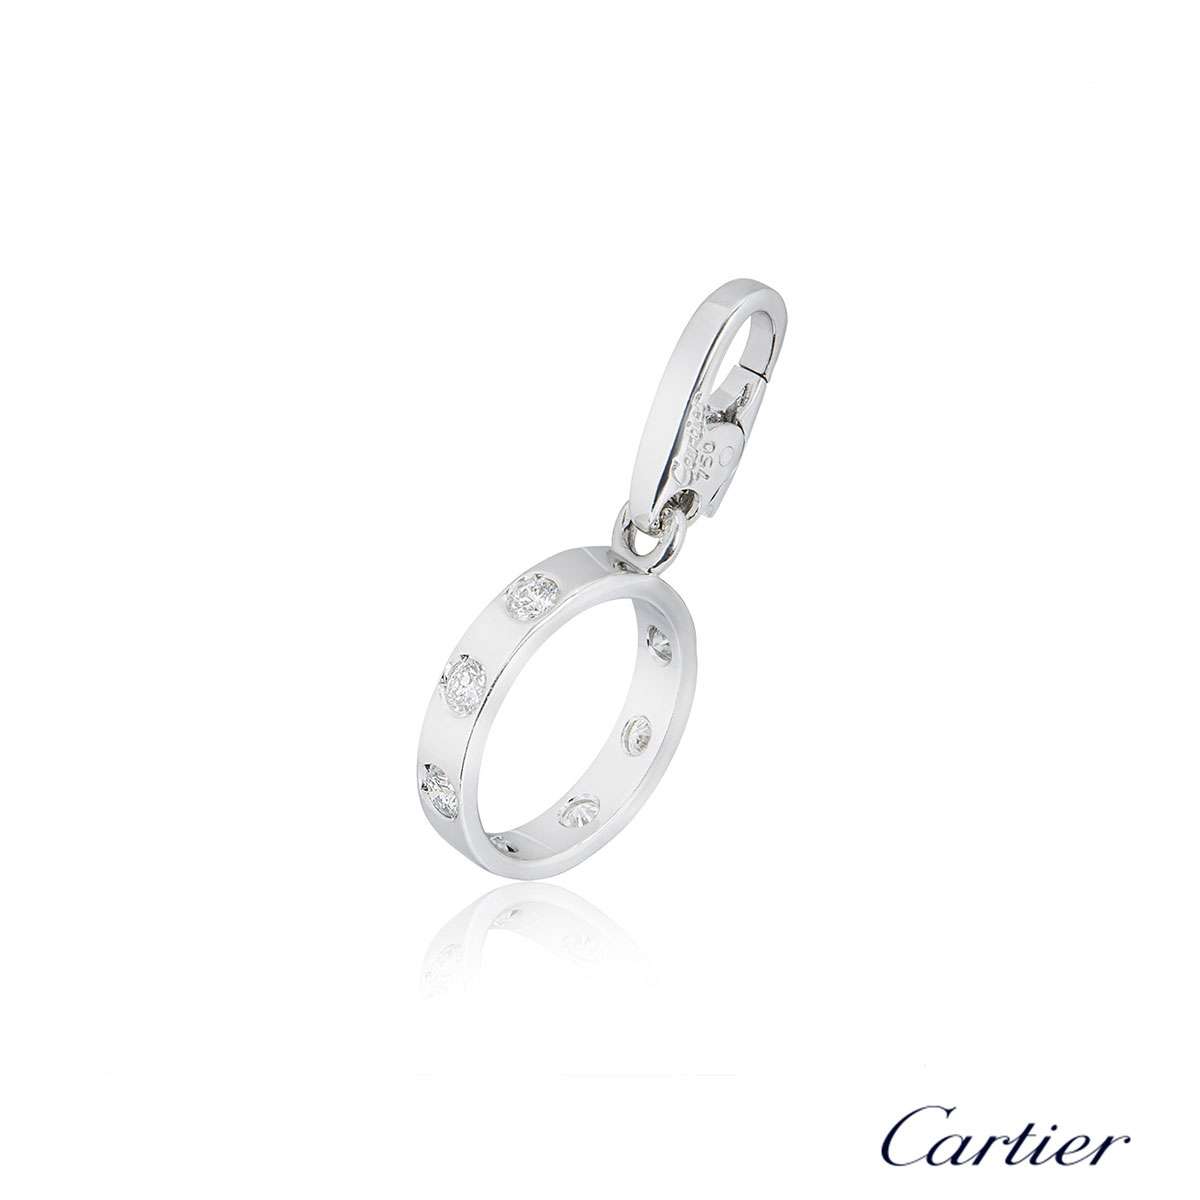 Cartier Love Charm